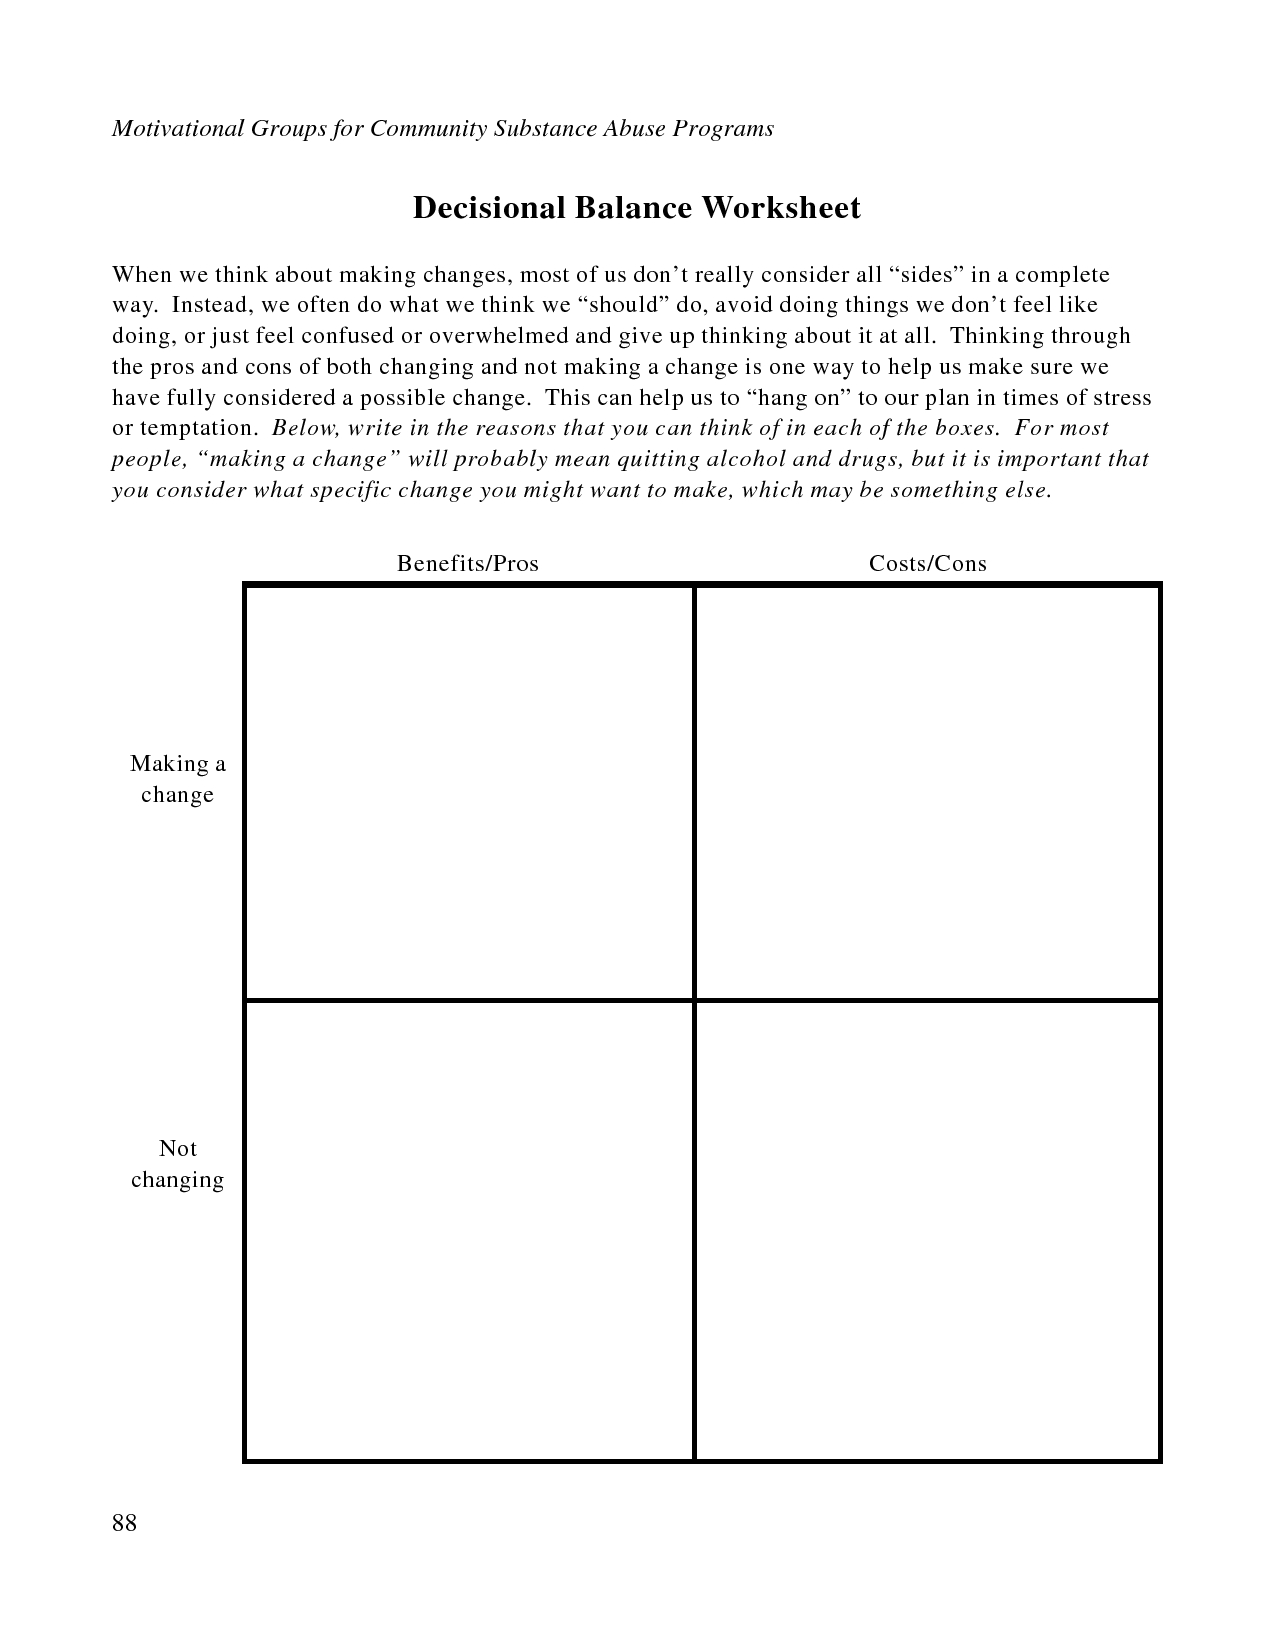 Free Printable Dbt Worksheets | Decisional Balance Worksheet - Pdf - Free Printable Recovery Games